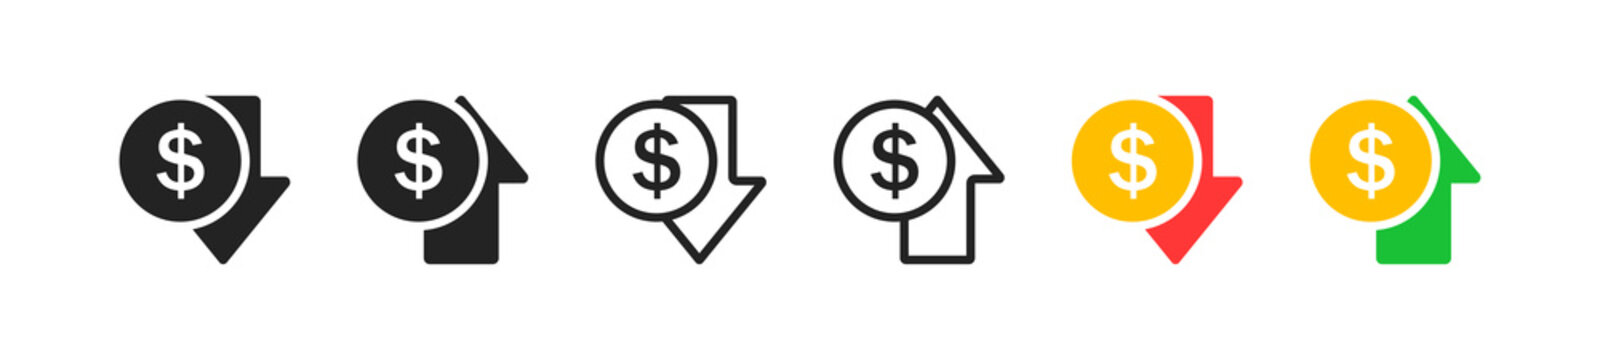 Money increase icon set. Flat design. Financial benefit concept. Losing money. Symbol of cost rising.